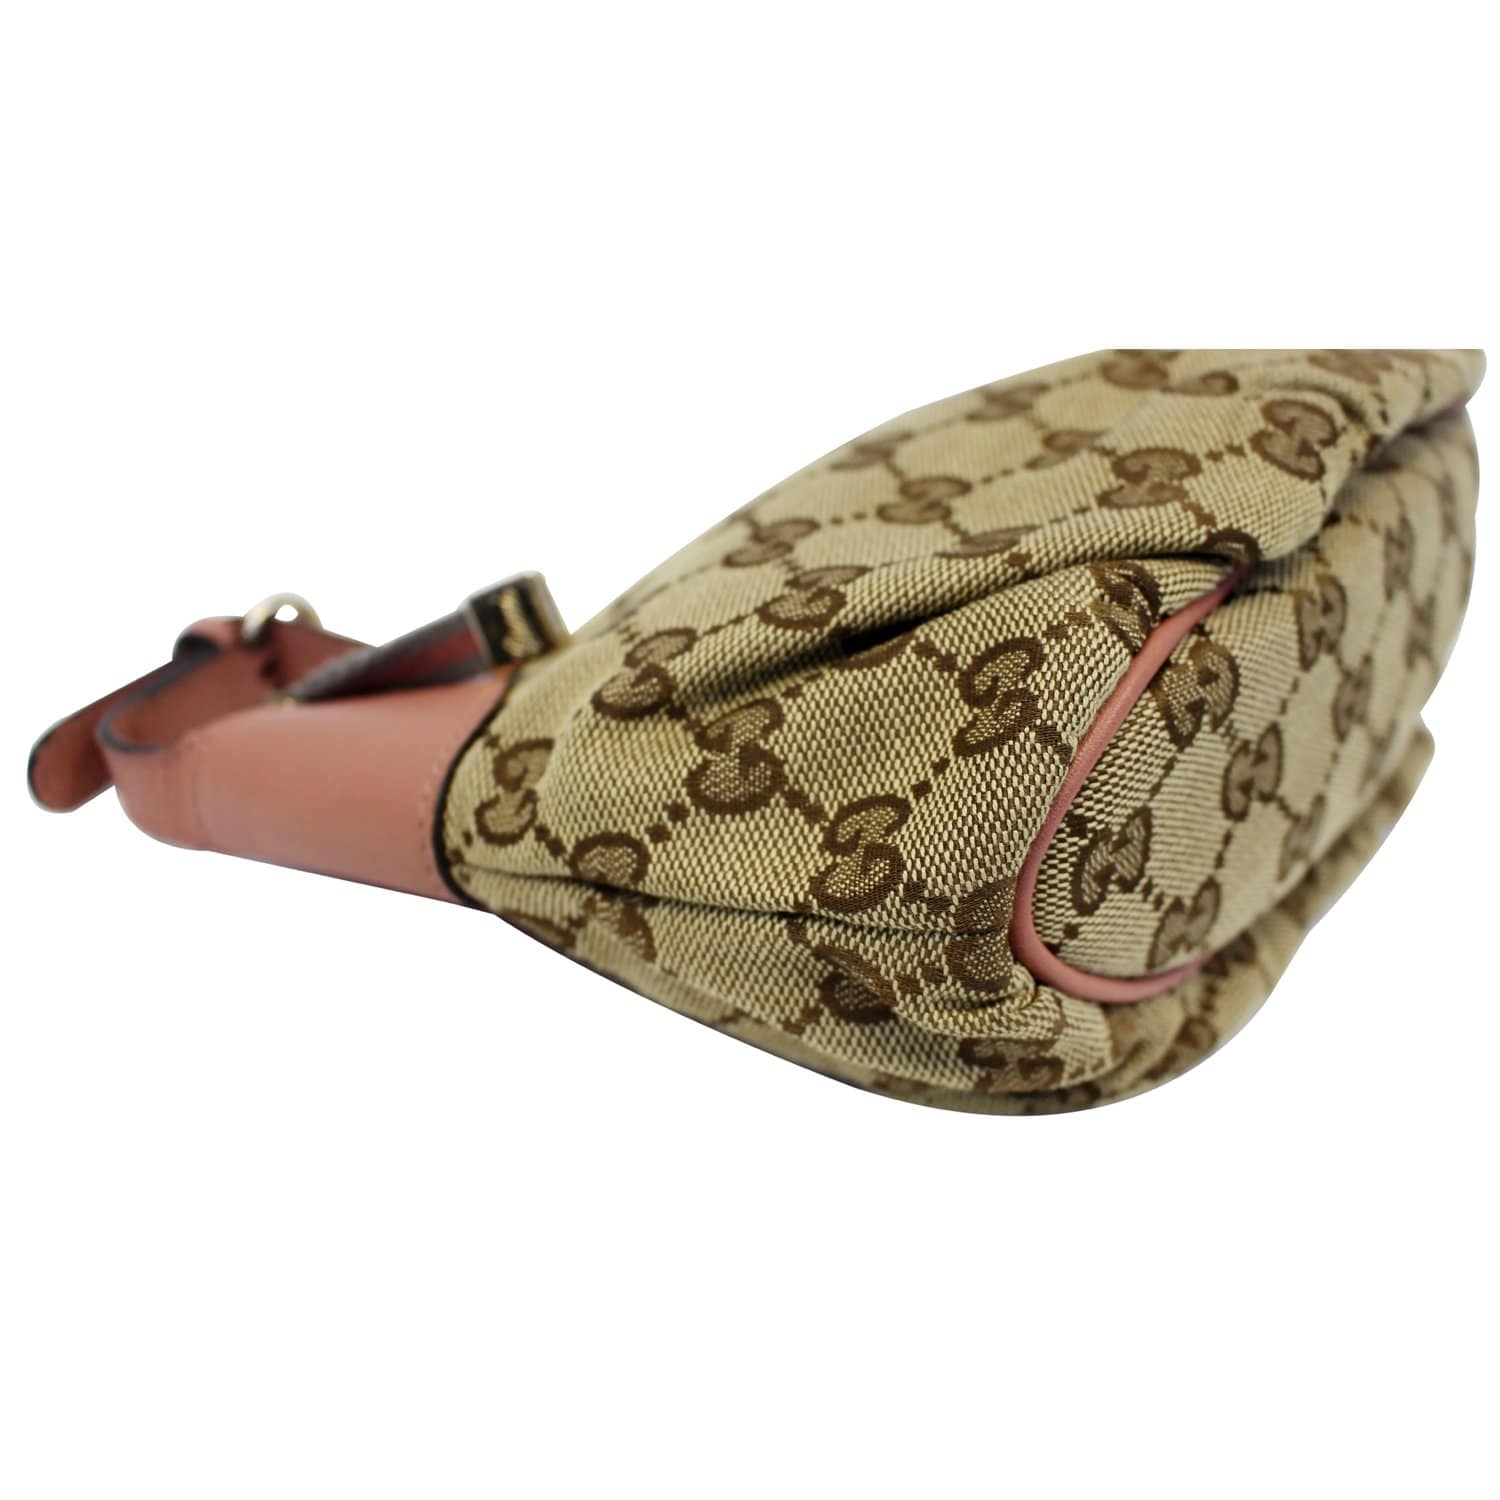 Gucci Gg Monogram Pink Pochette Brown Canvas Shoulder Bag